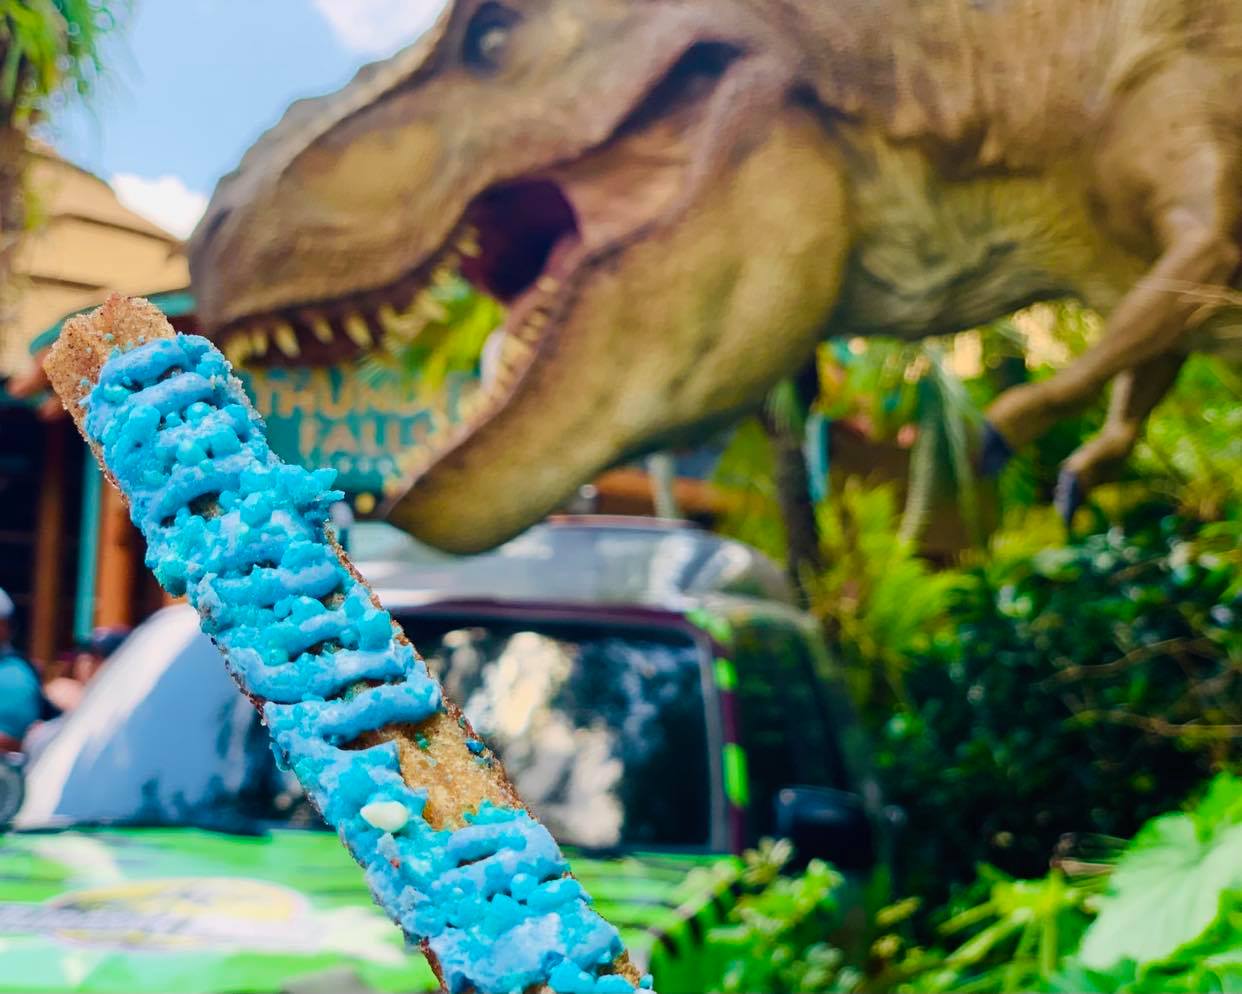 Jurassic Park at Universal's Islands of Adventure, Universal Studios,  Orlando, Florida, United States - Theme Park Review